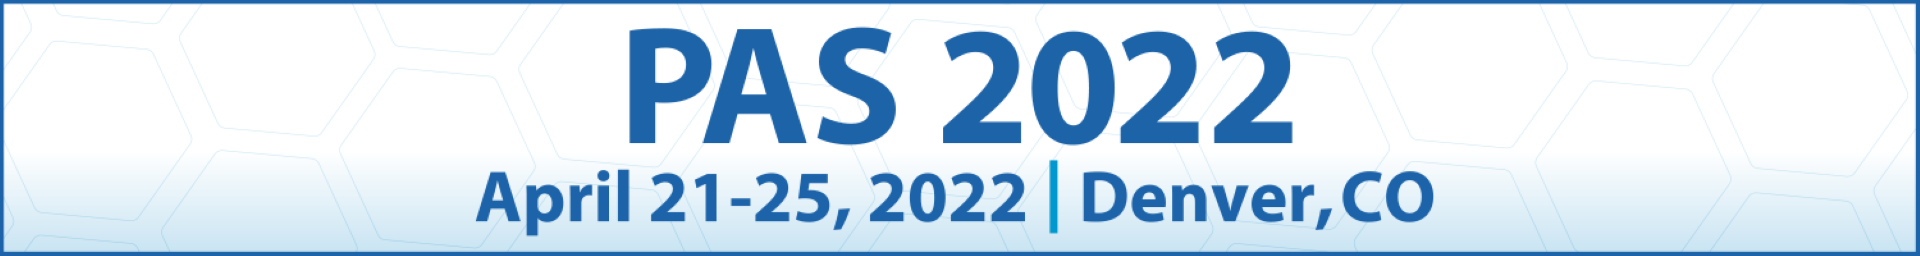 PAS 2022 Event Banner